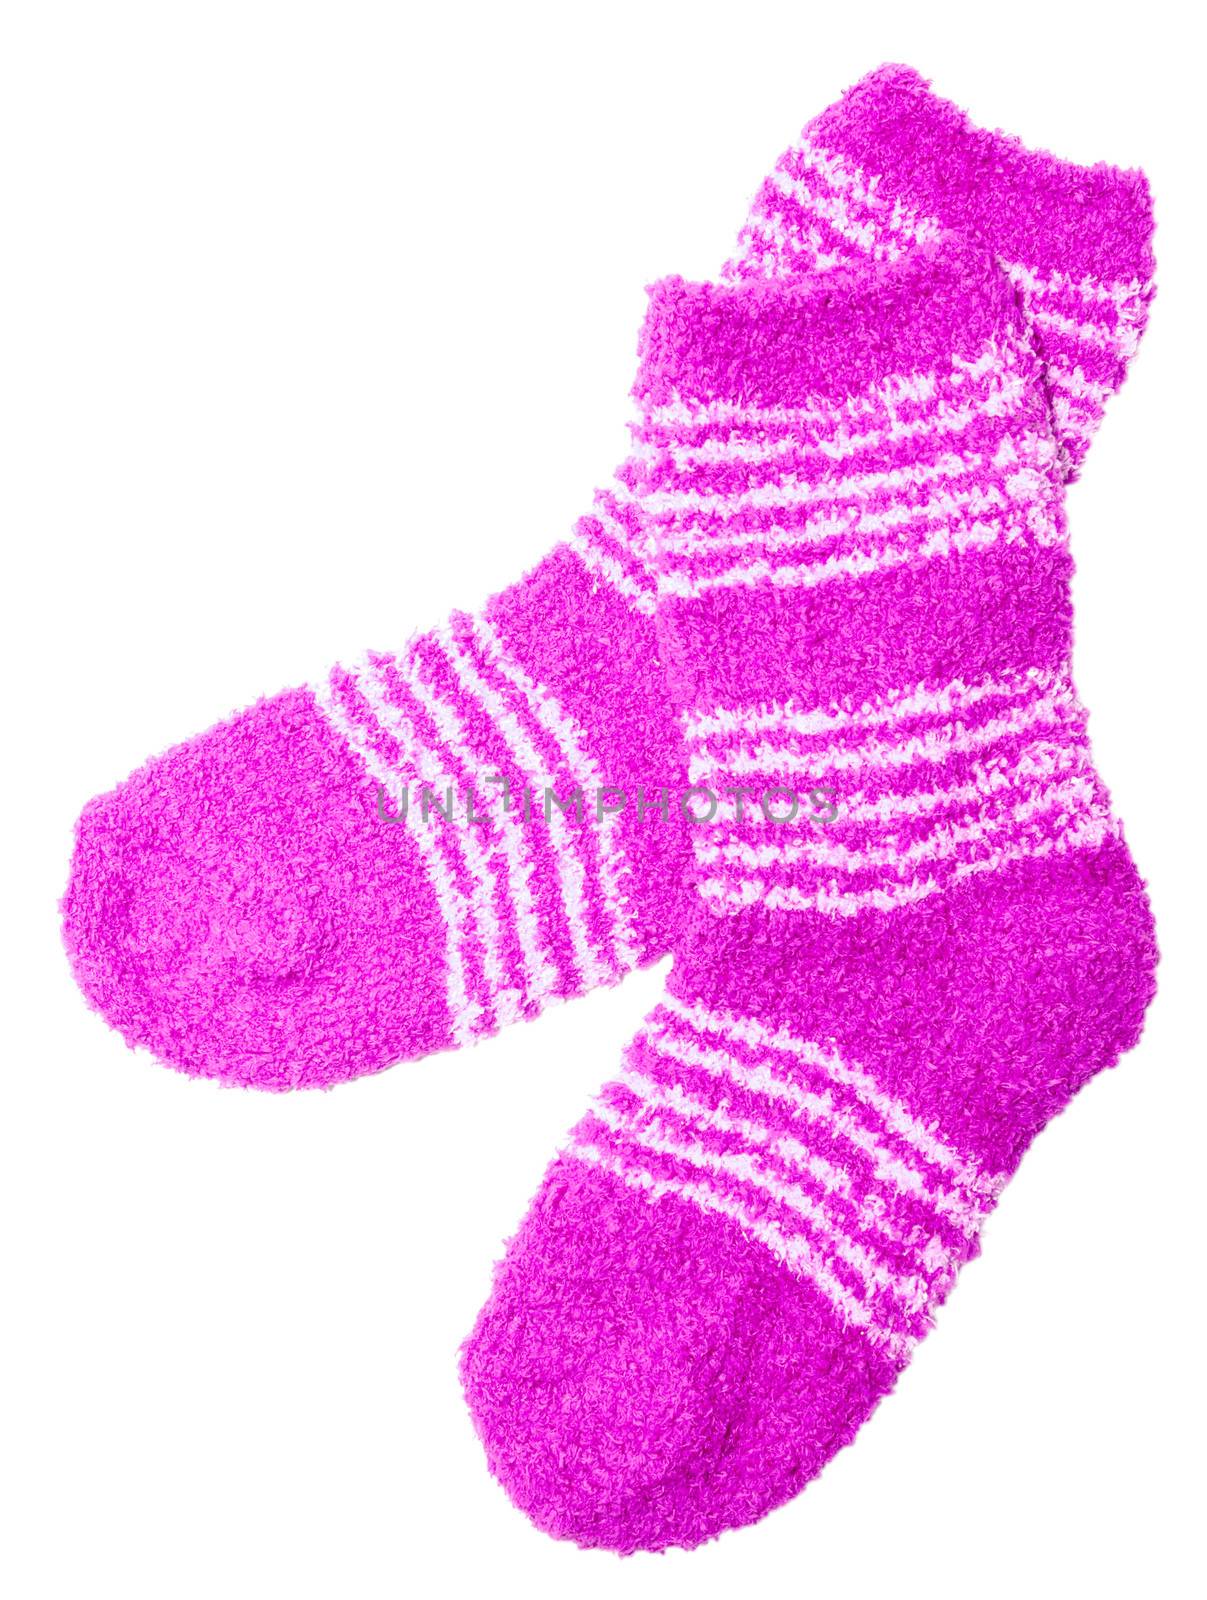 pink socks by kostikla